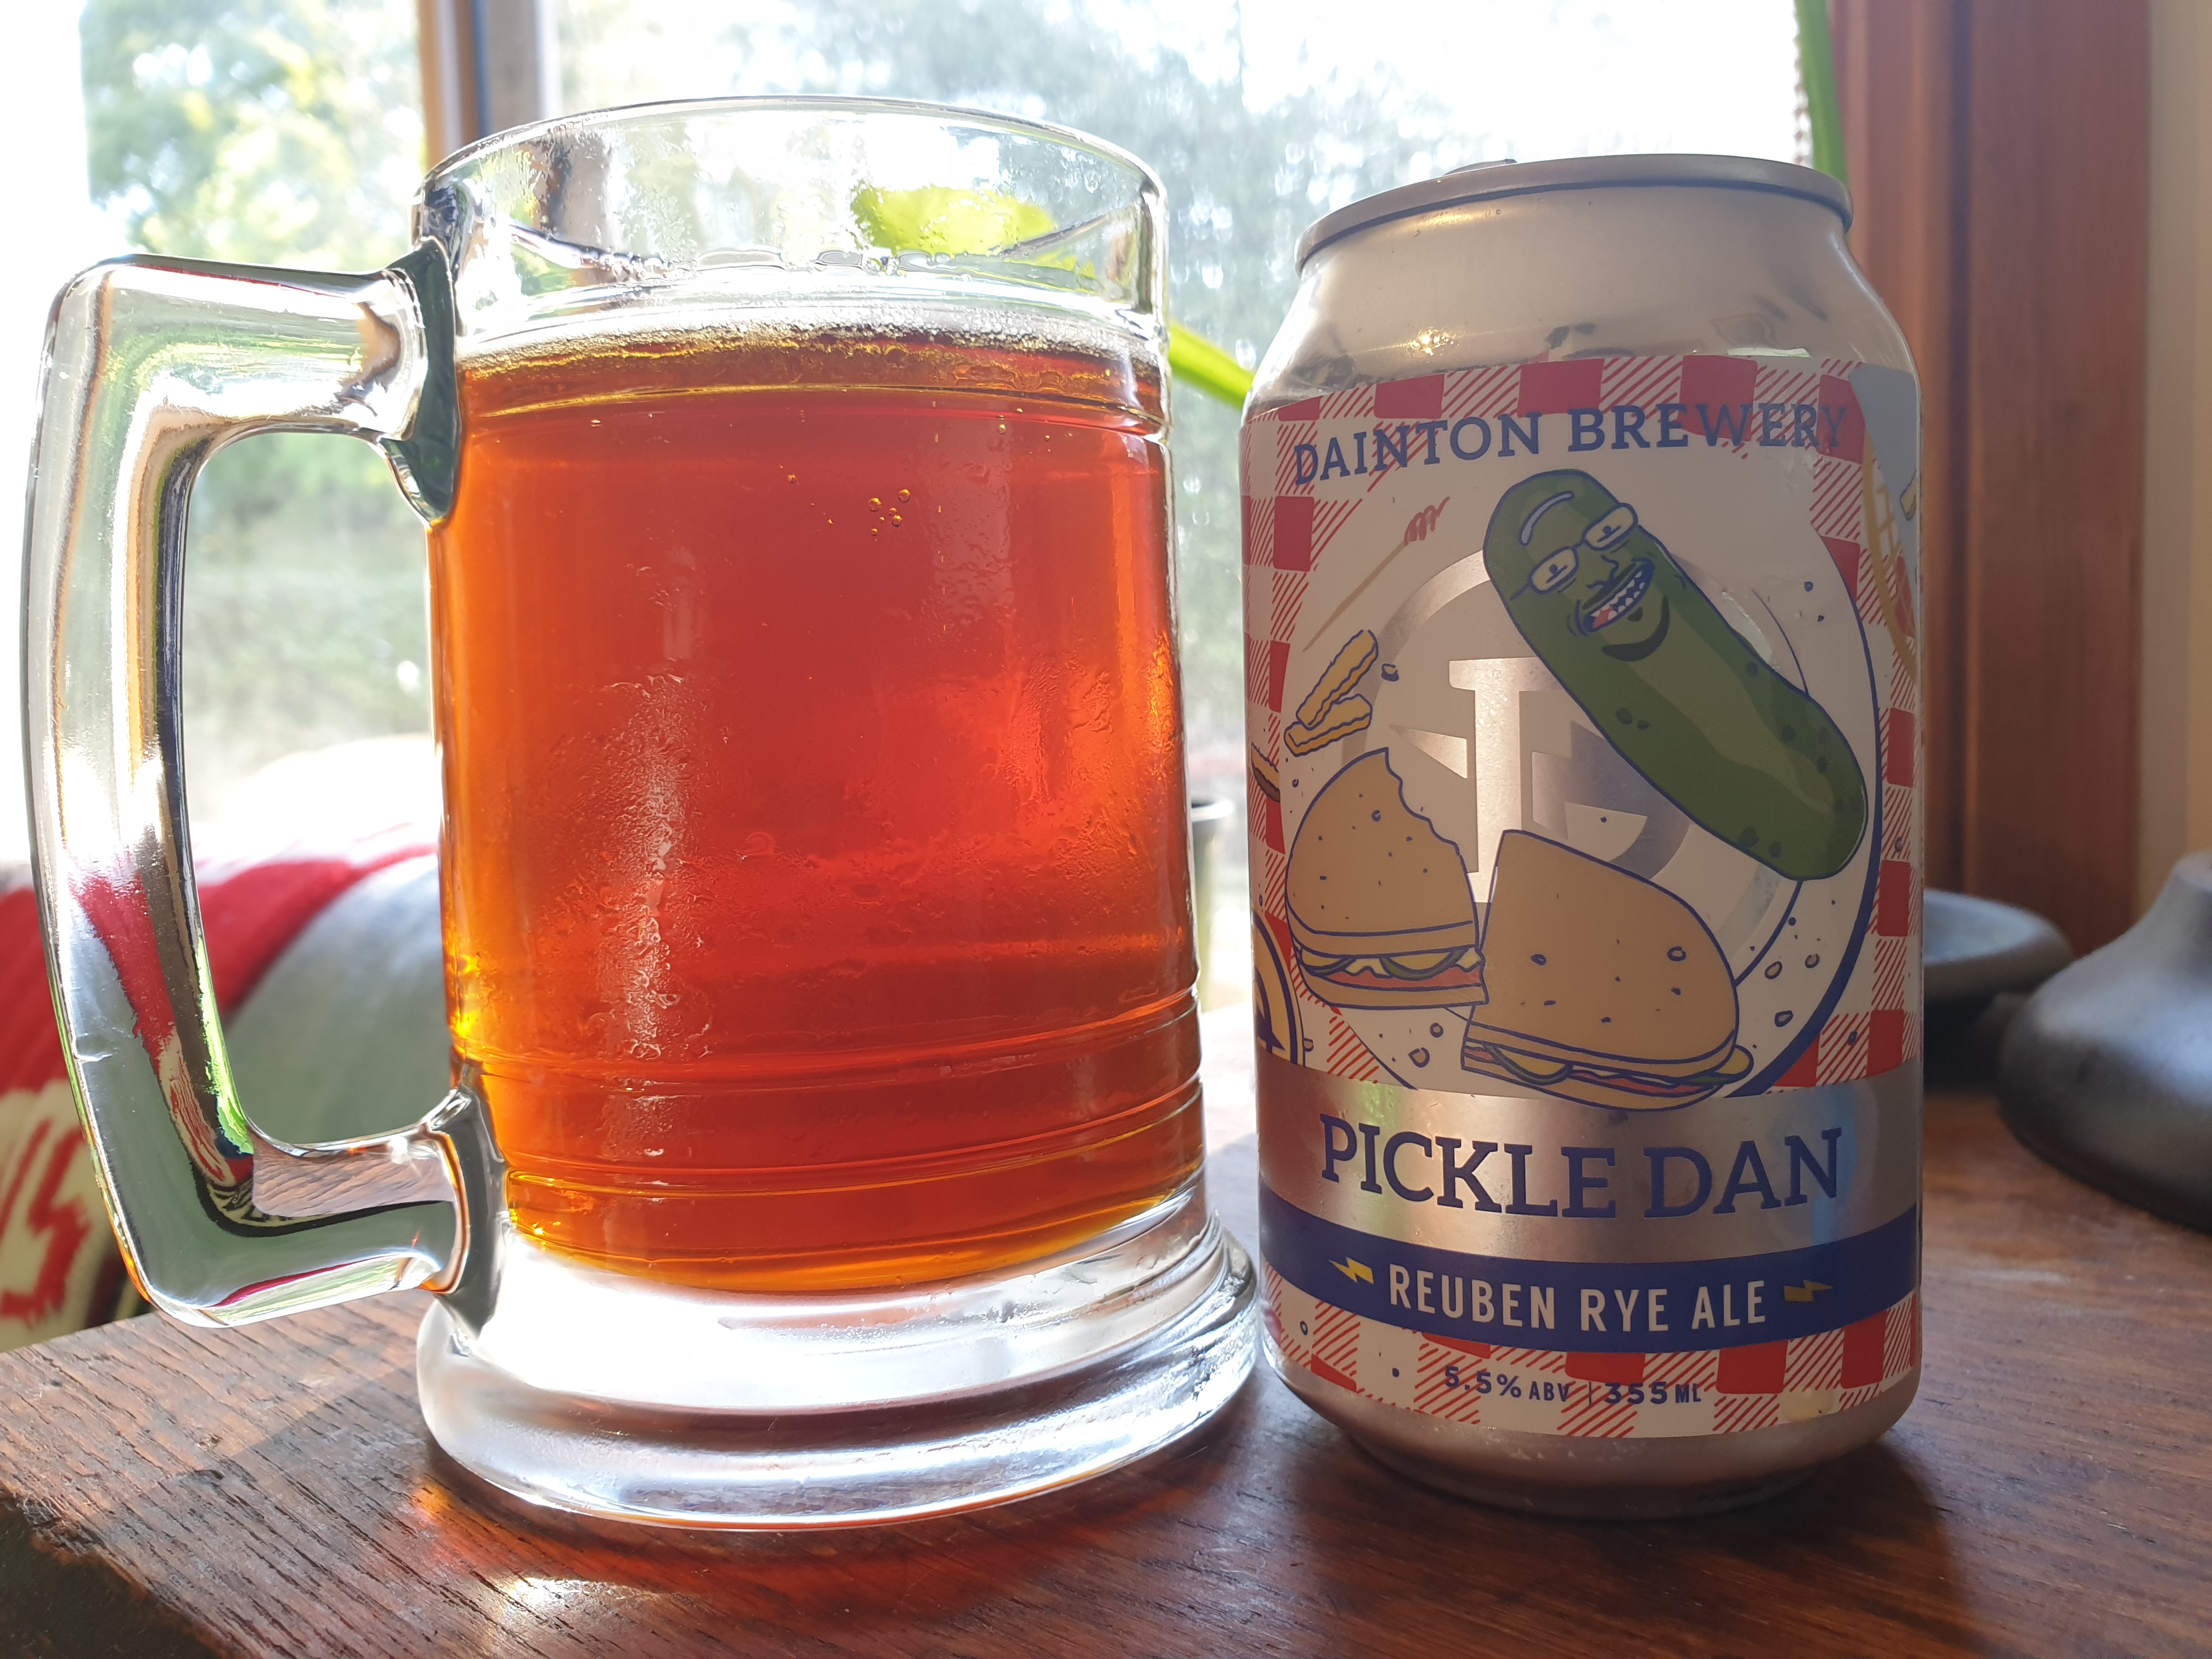 Pickle Dan Rye Ale by Dainton Brewery